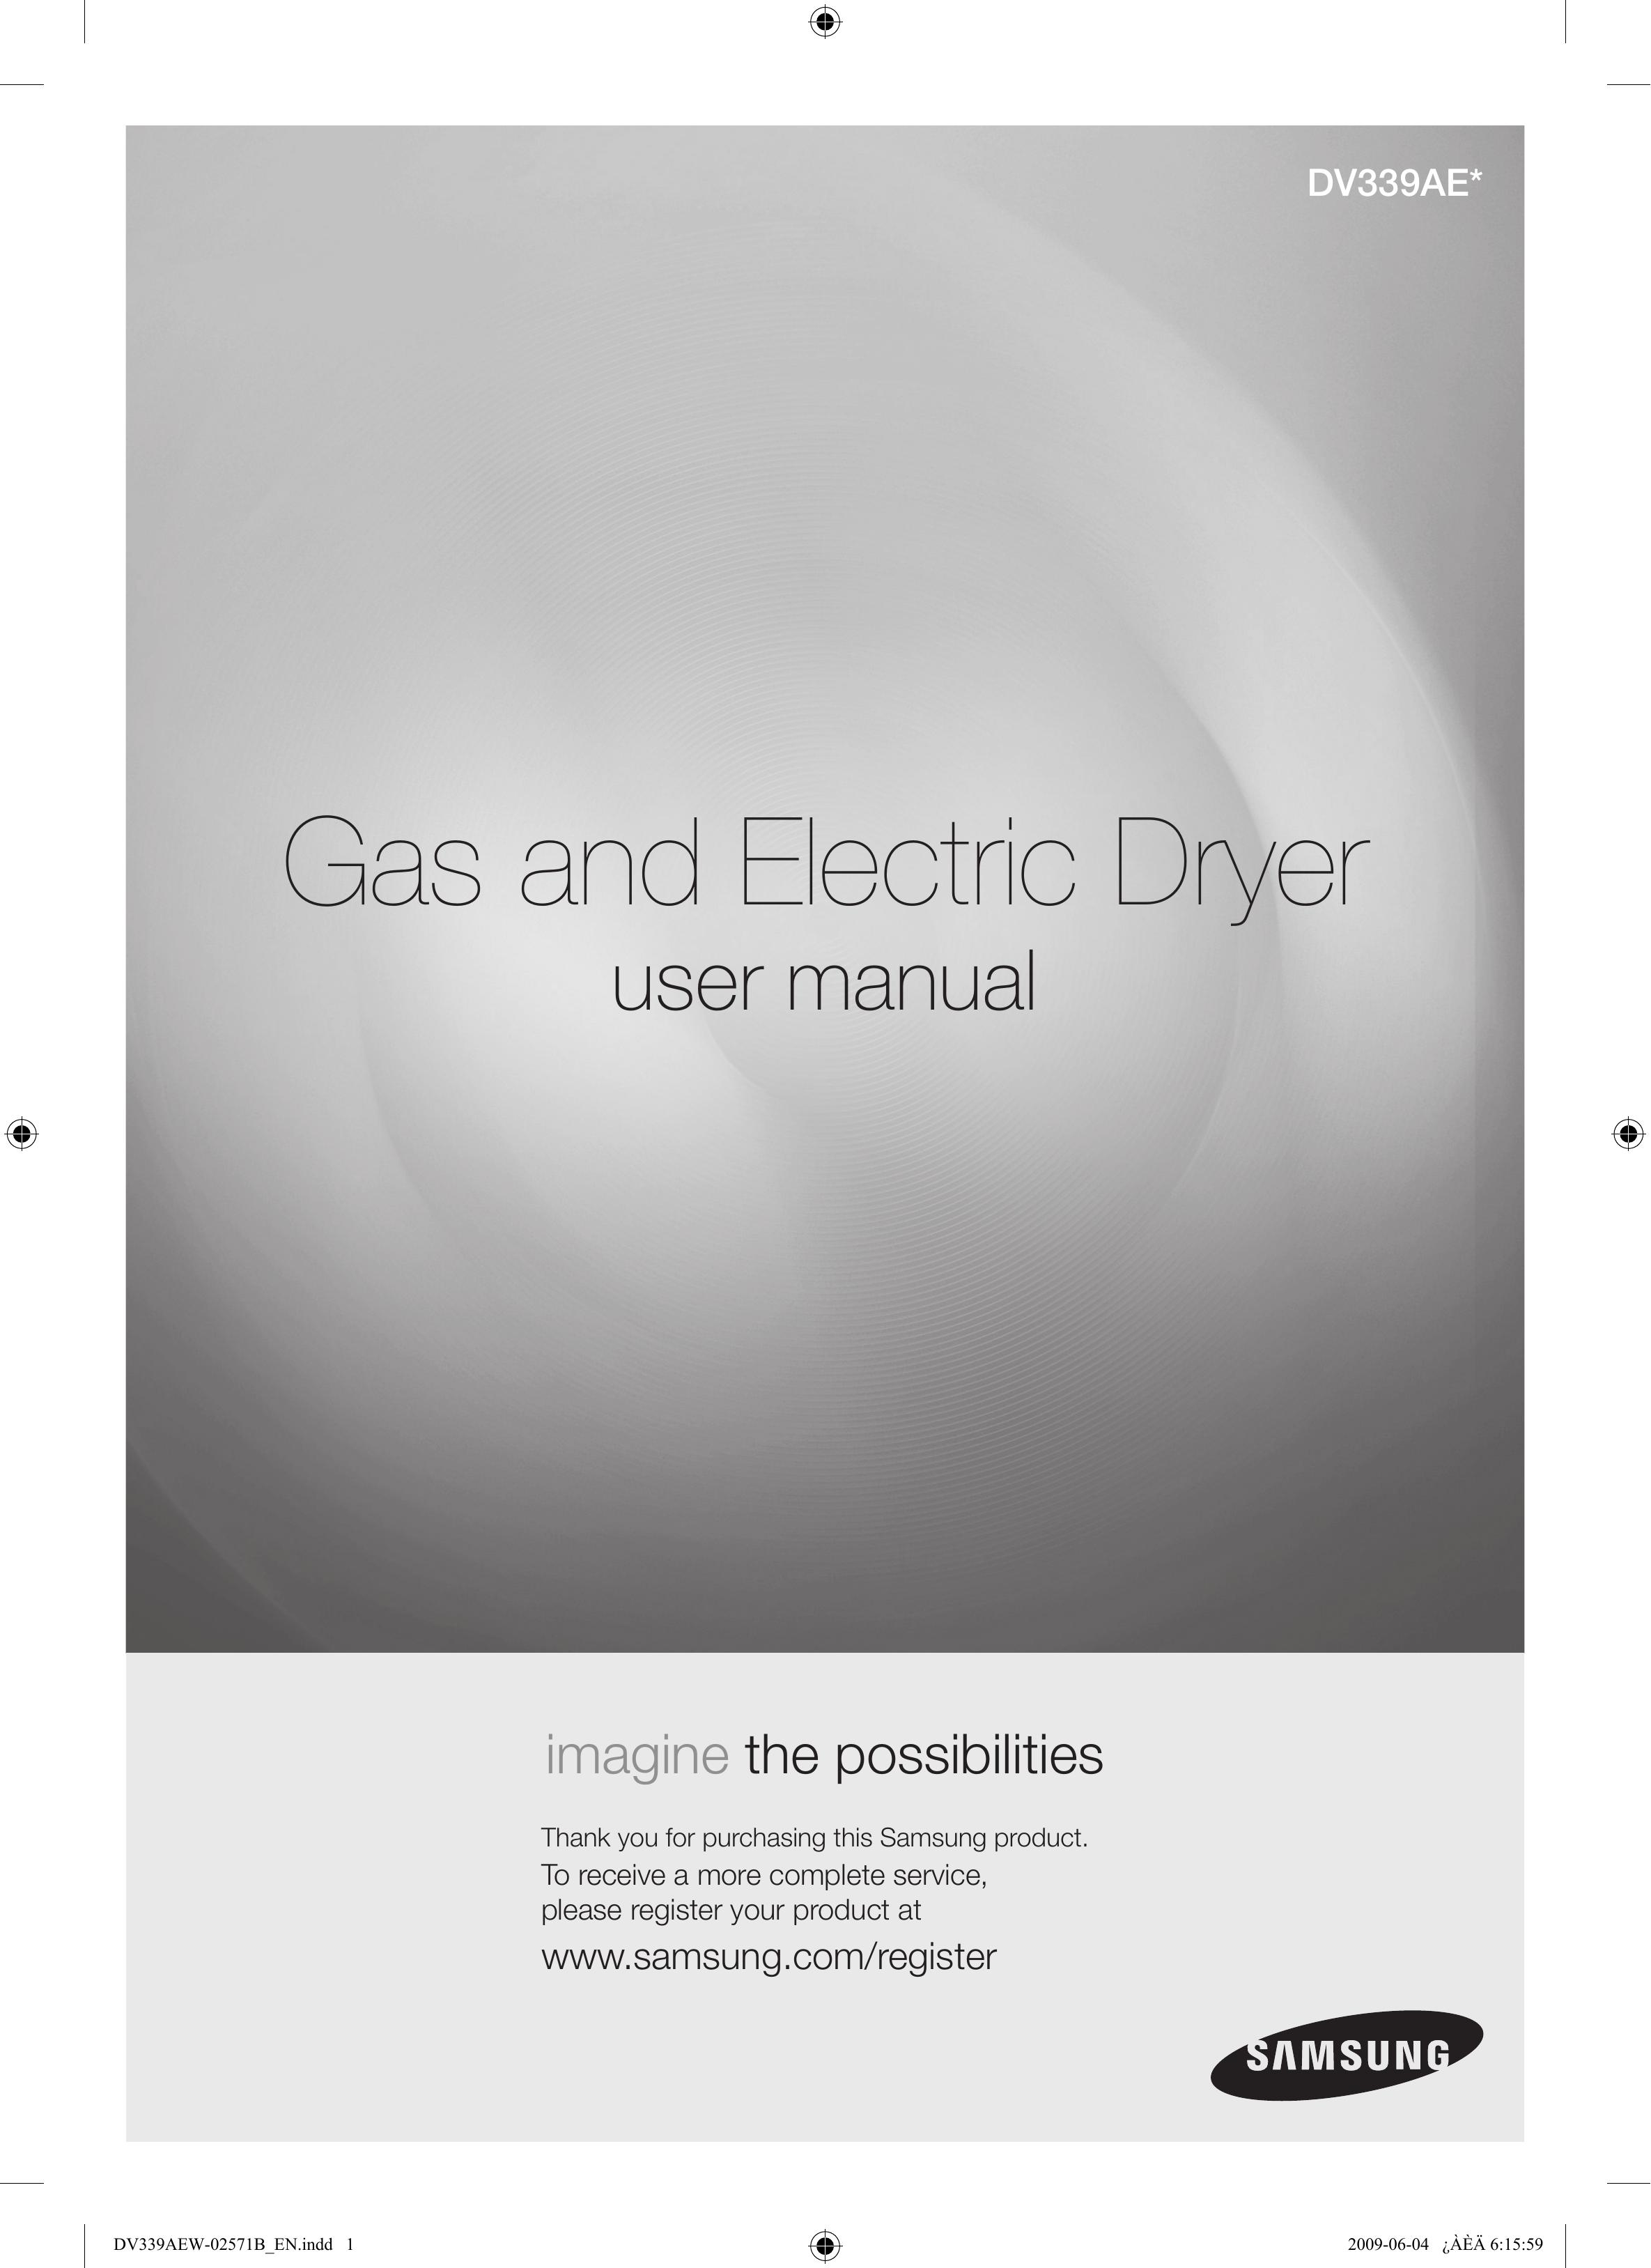 Samsung DV339AEW Clothes Dryer User Manual